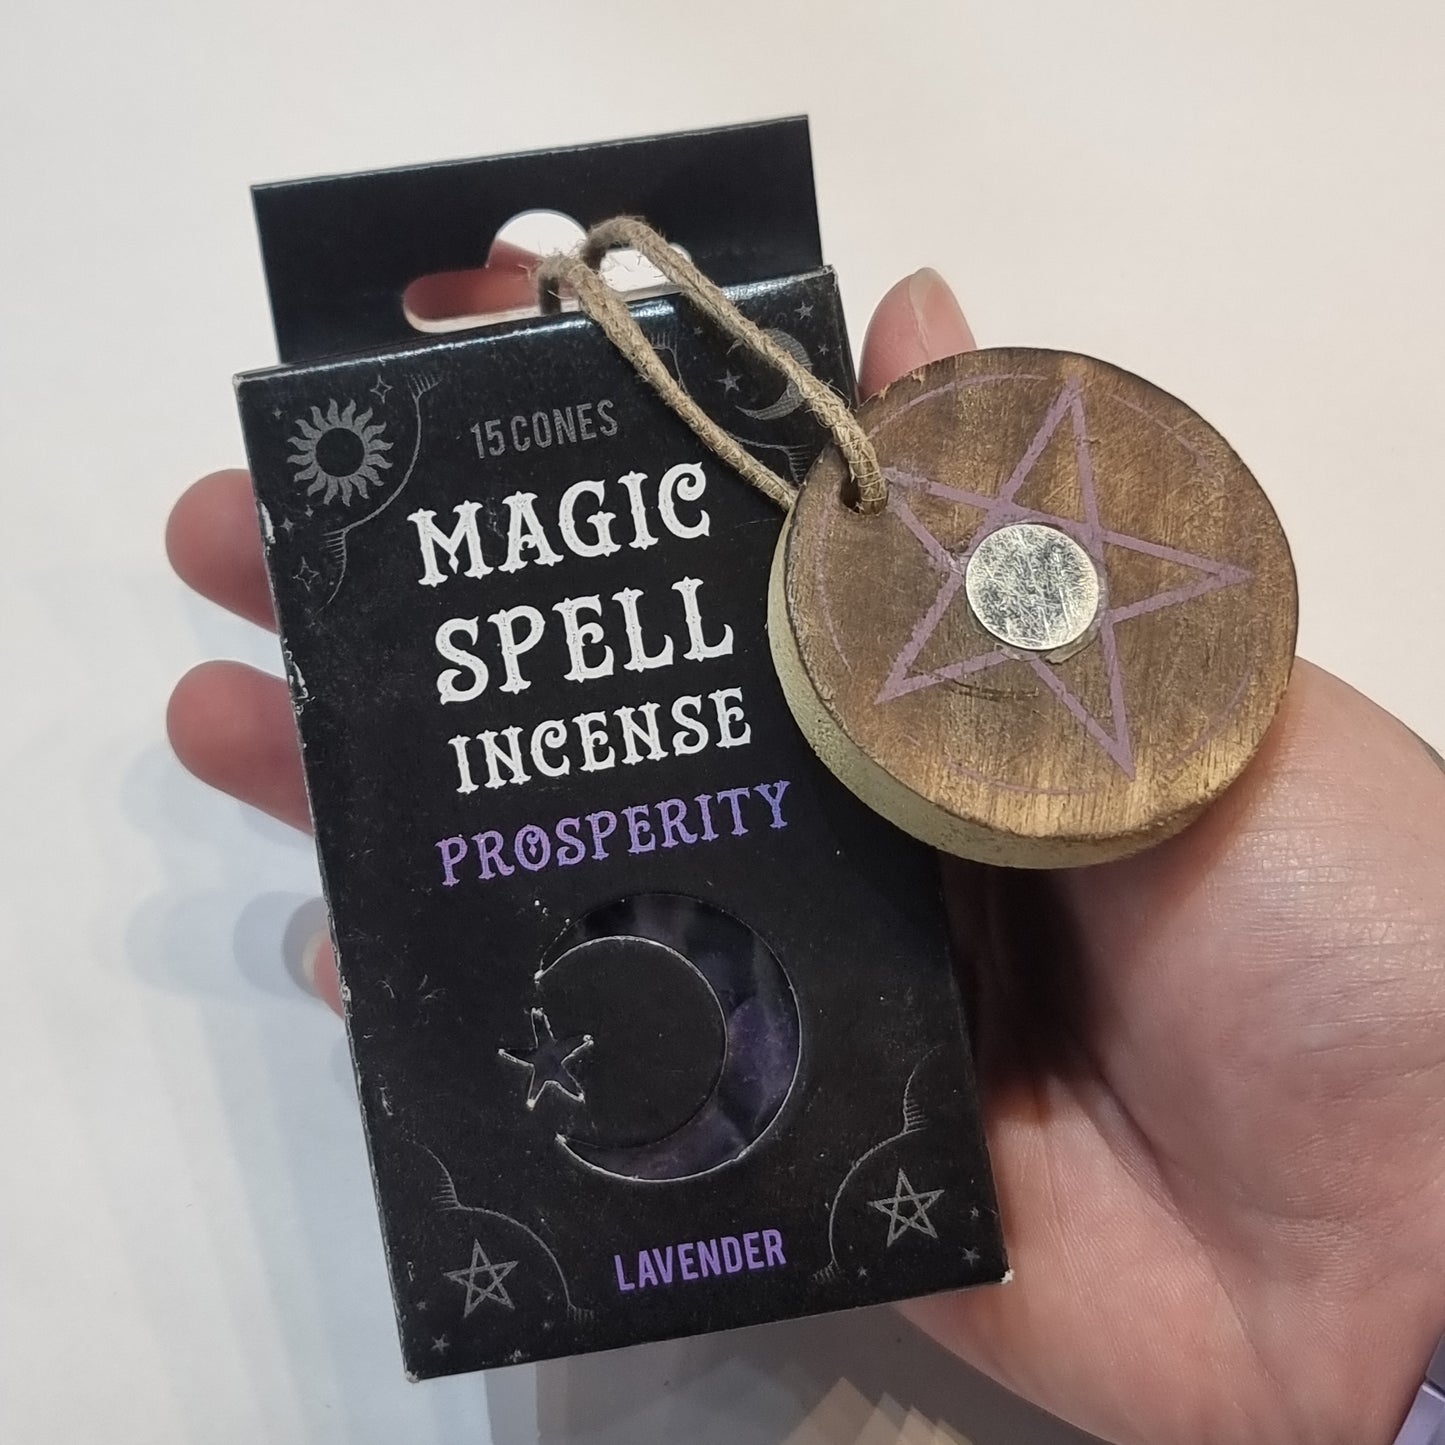 Magic spell incense cones - lavender - Rivendell Shop